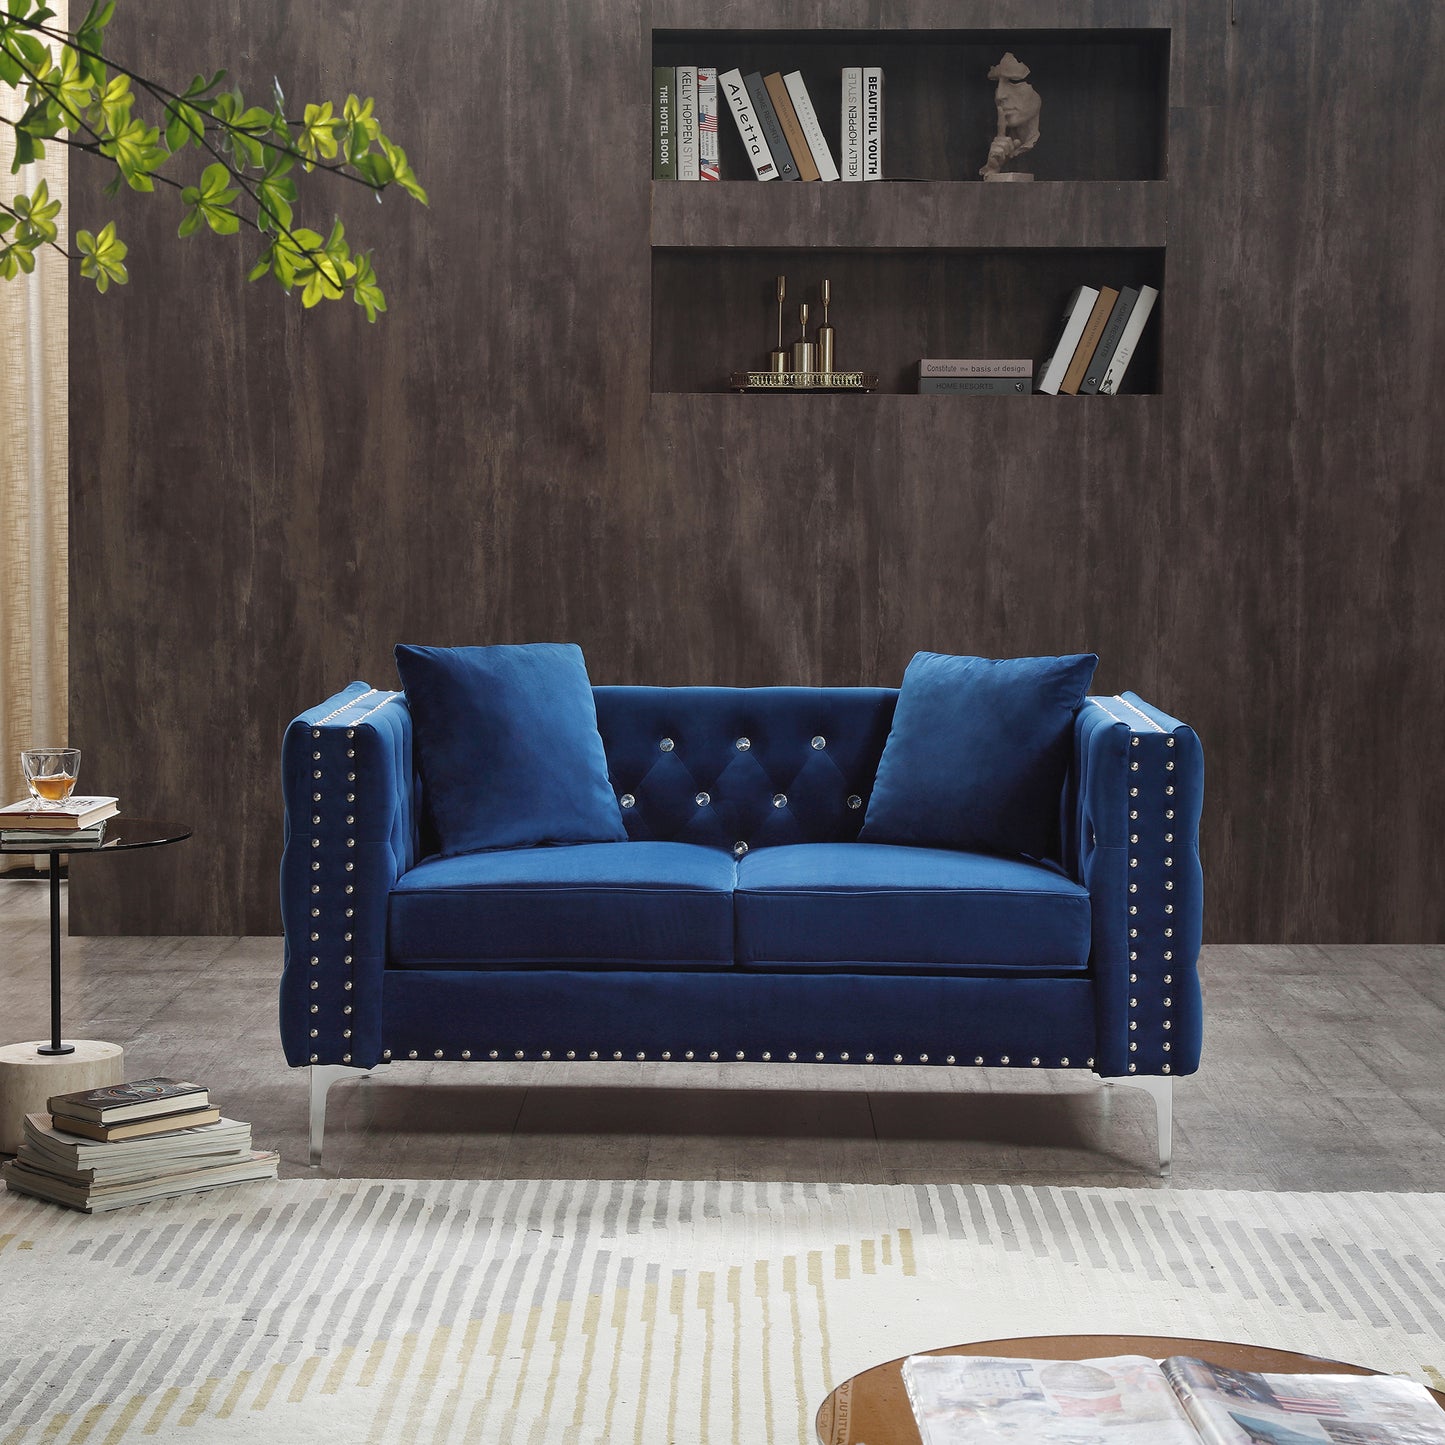 2 Piece Modern Velvet Living Room Set with Sofa and Loveseat